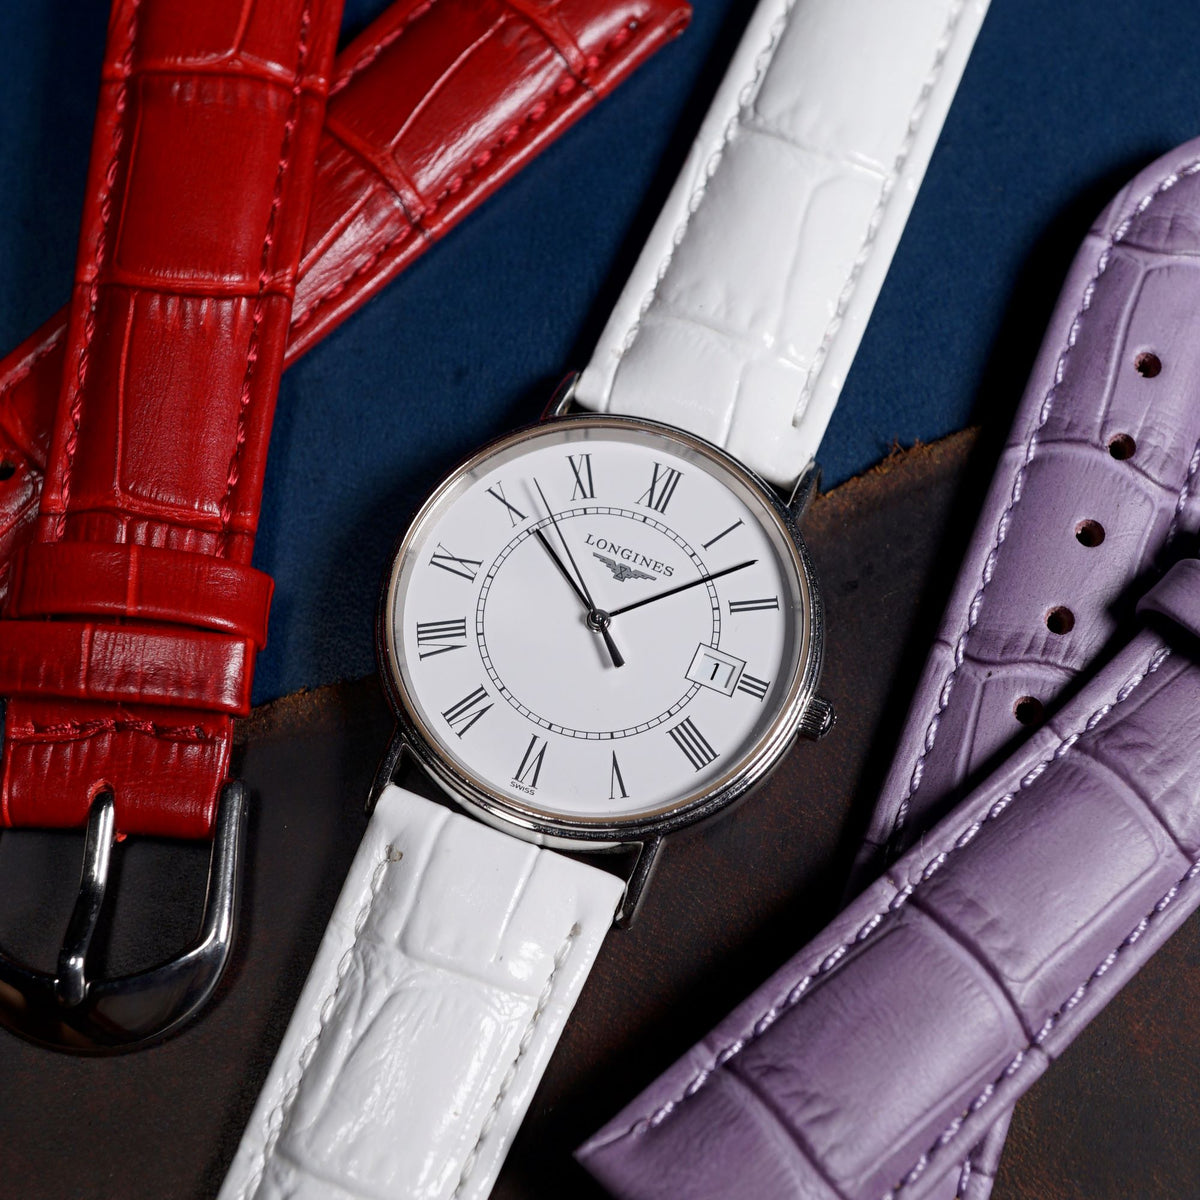 Genuine Croc Pattern Stitched Leather Watch Strap in White (12mm) - Nomad Watch Works SG